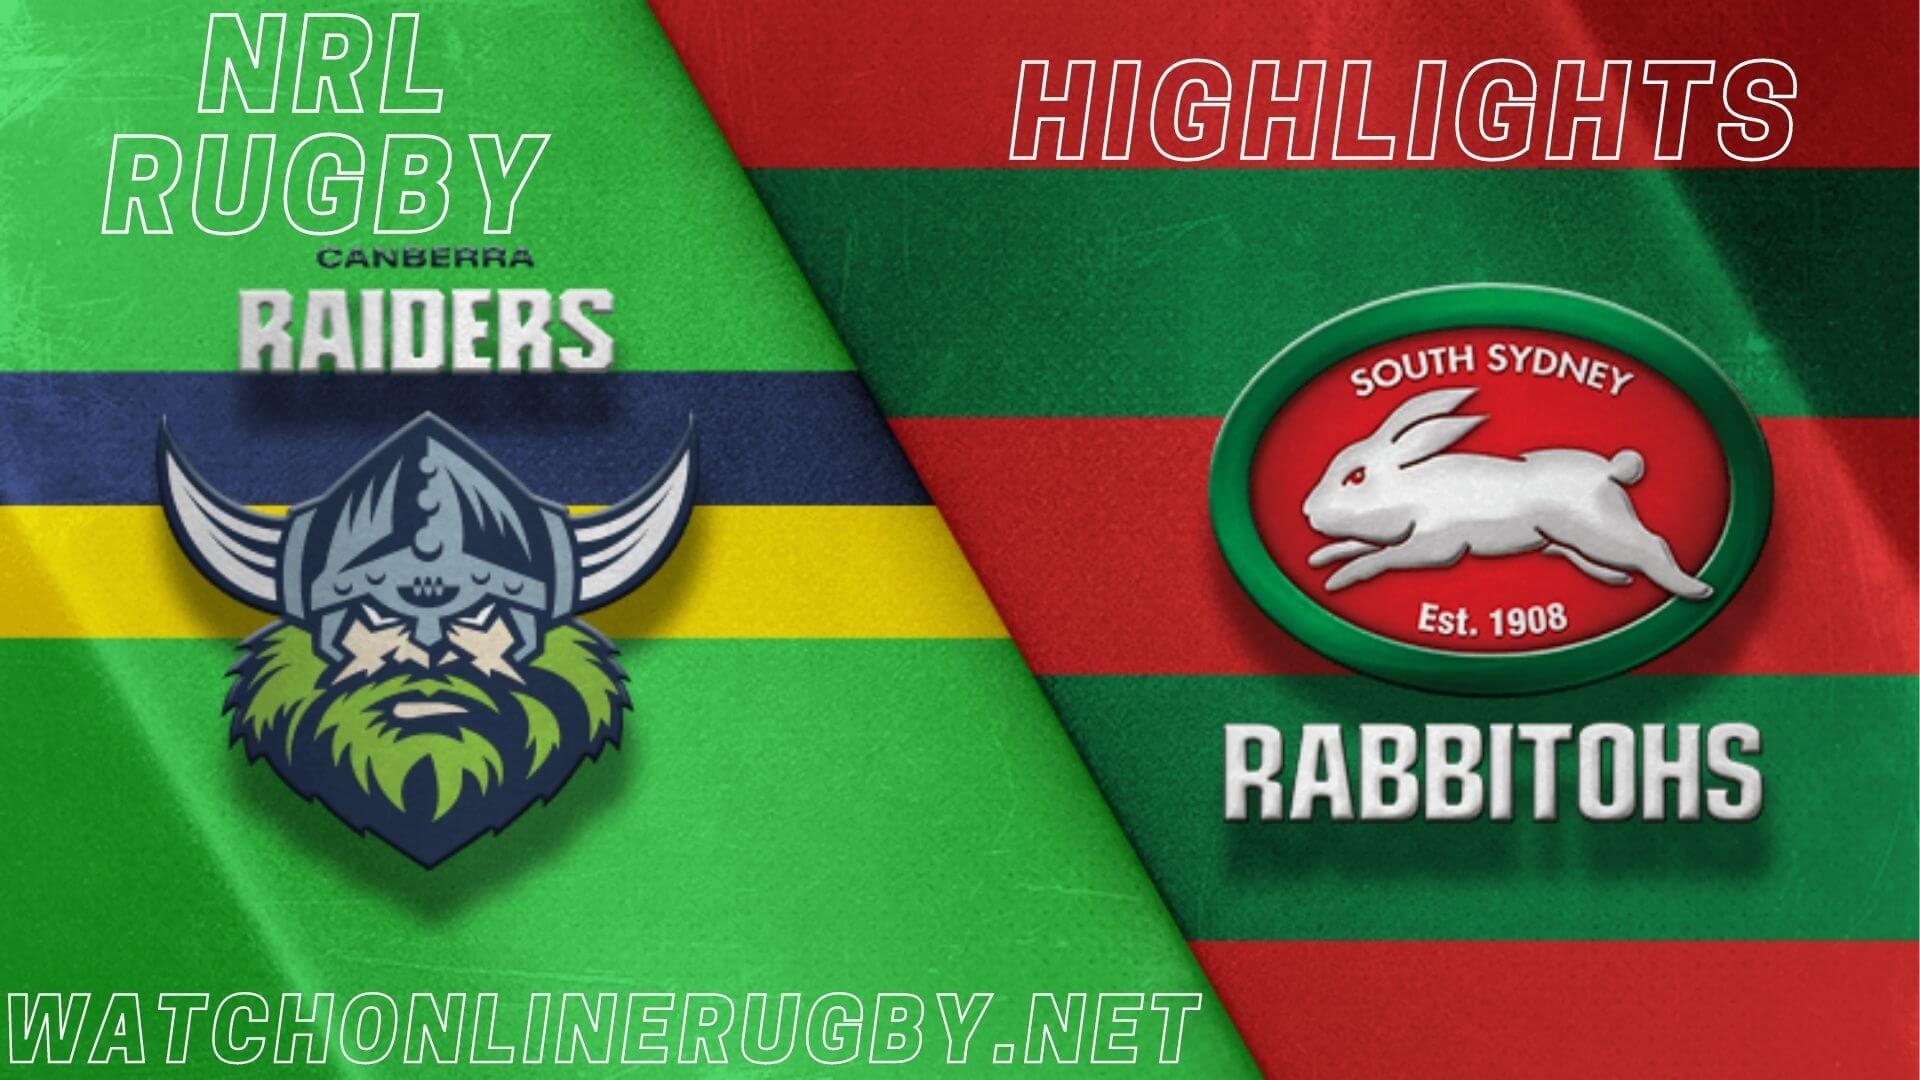 Rabbitohs Vs Raiders Highlights RD 11 NRL Rugby